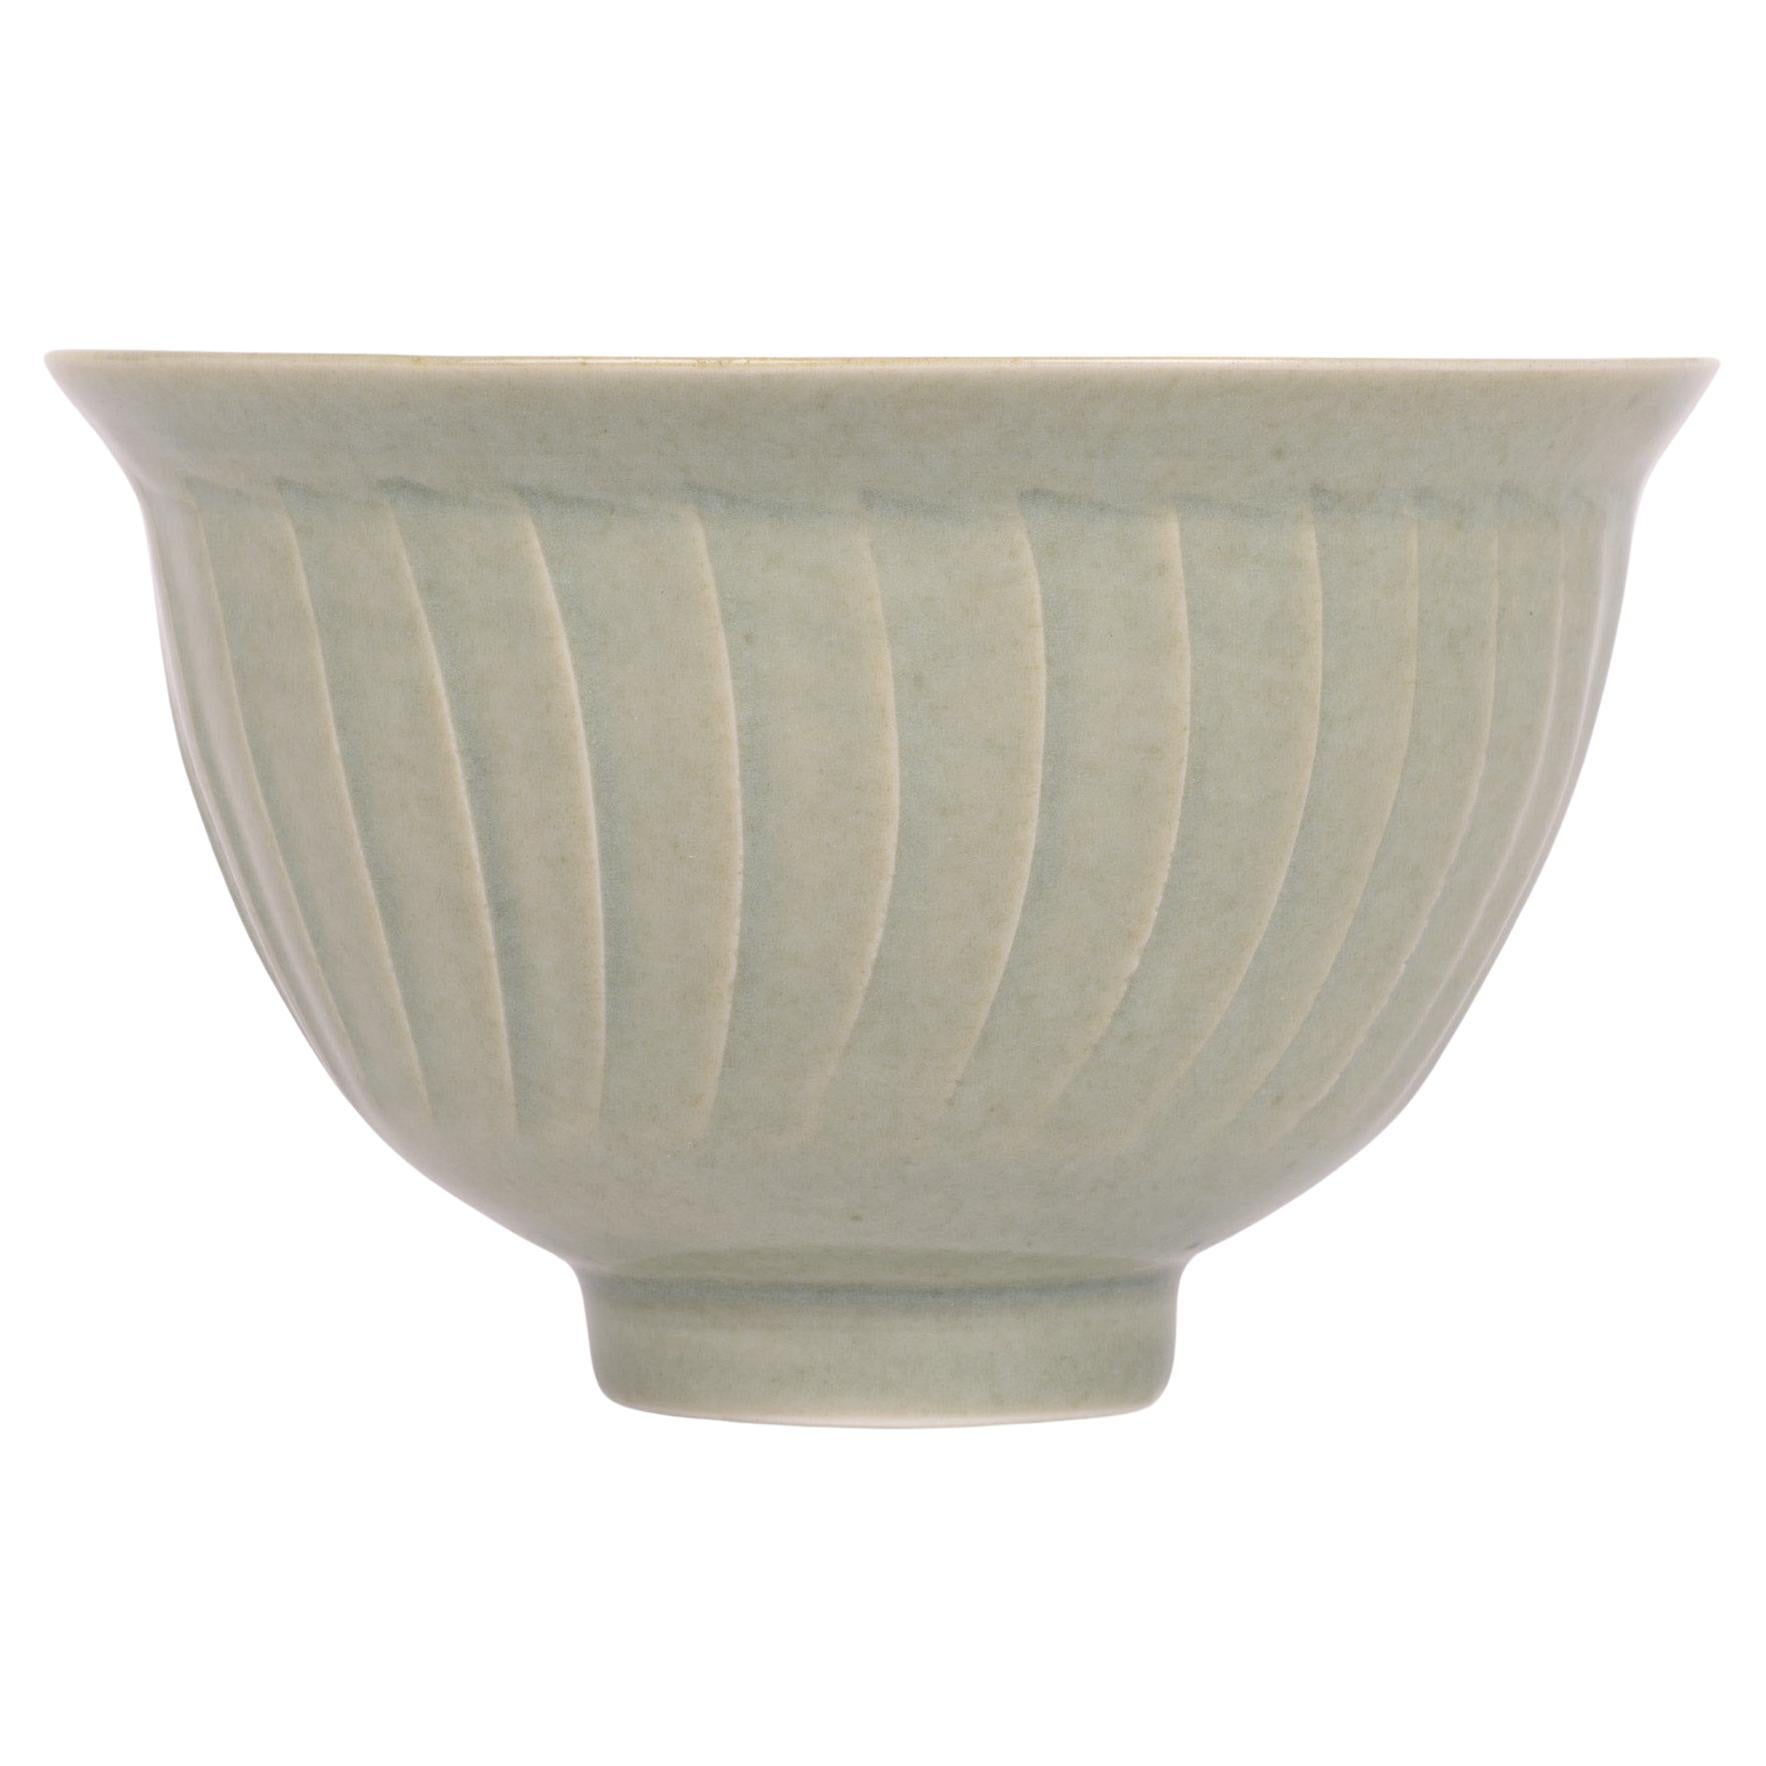 David Leach Lowerdown Studio Pottery Celadon Glazed Bowl For Sale